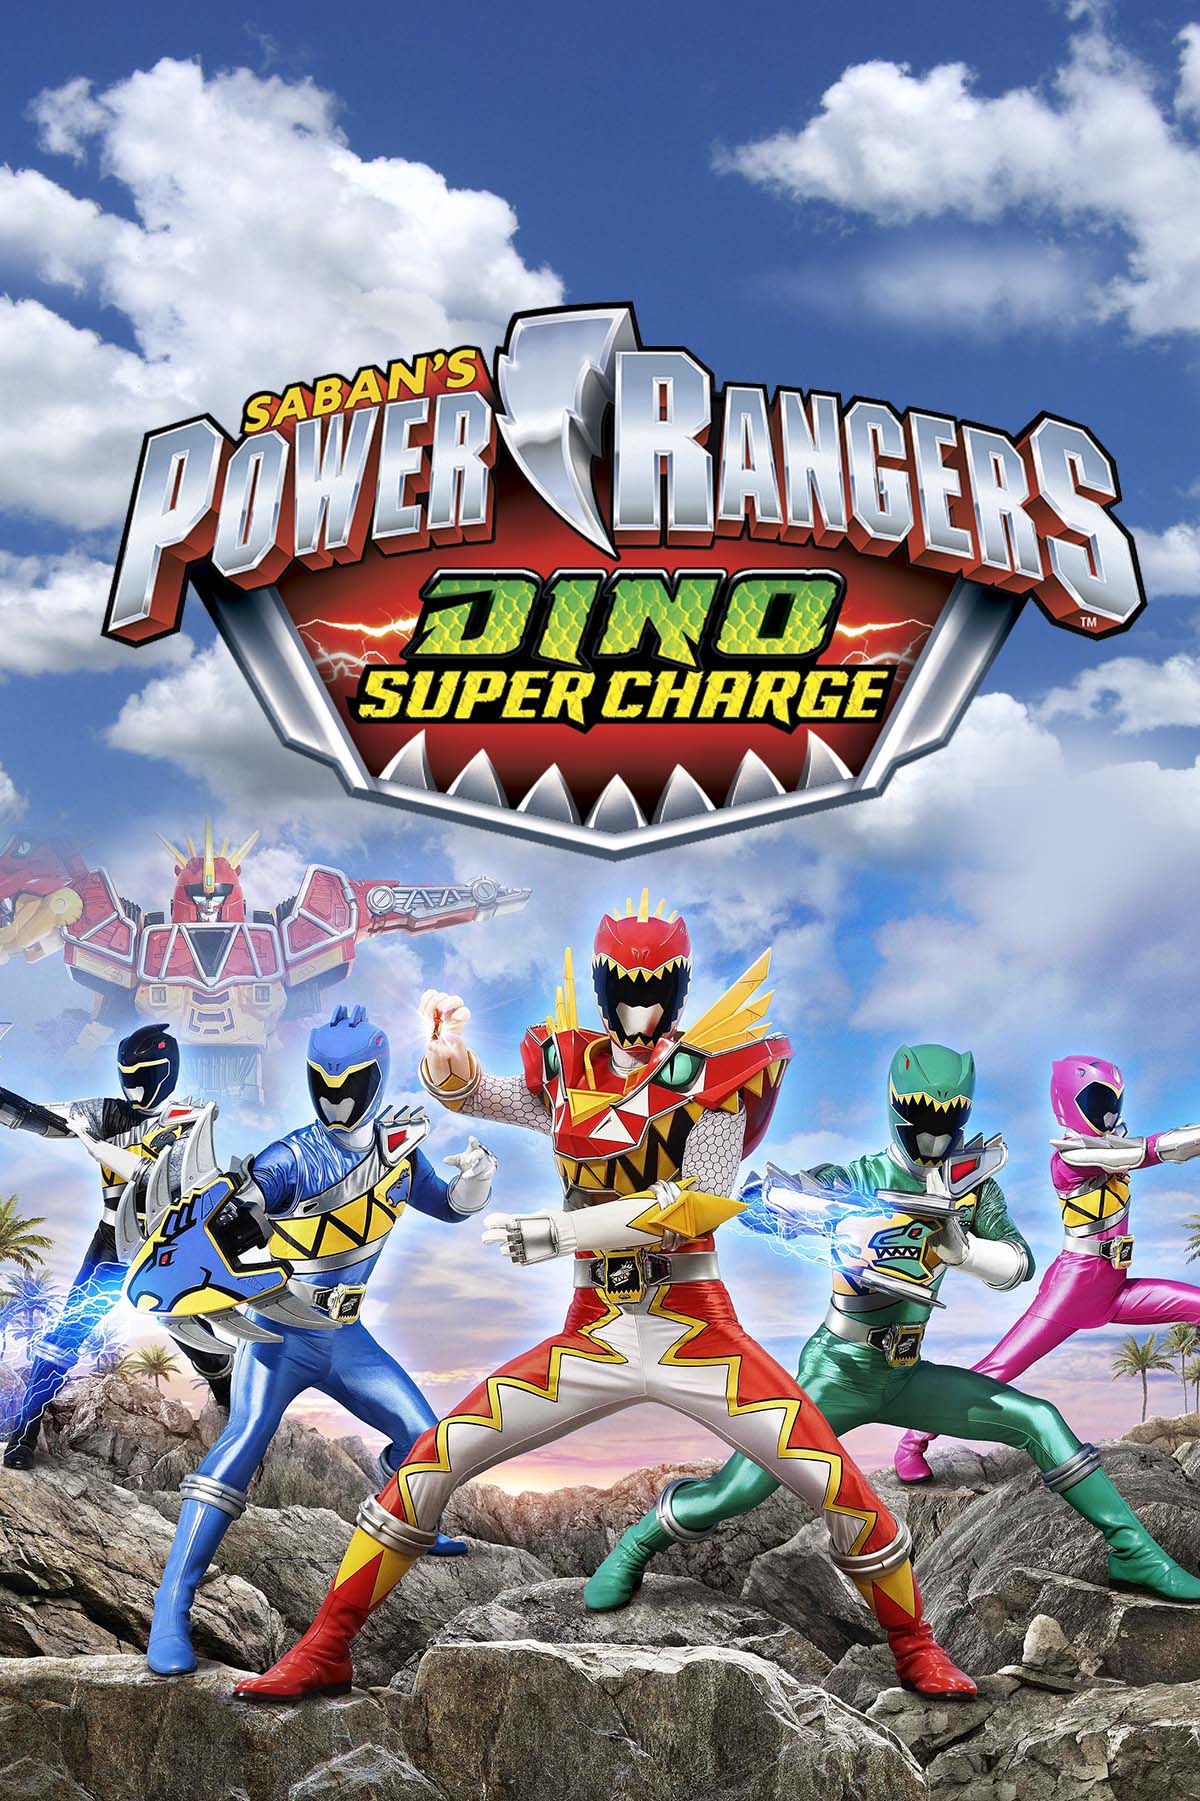 Dino power rangers Power Rangers